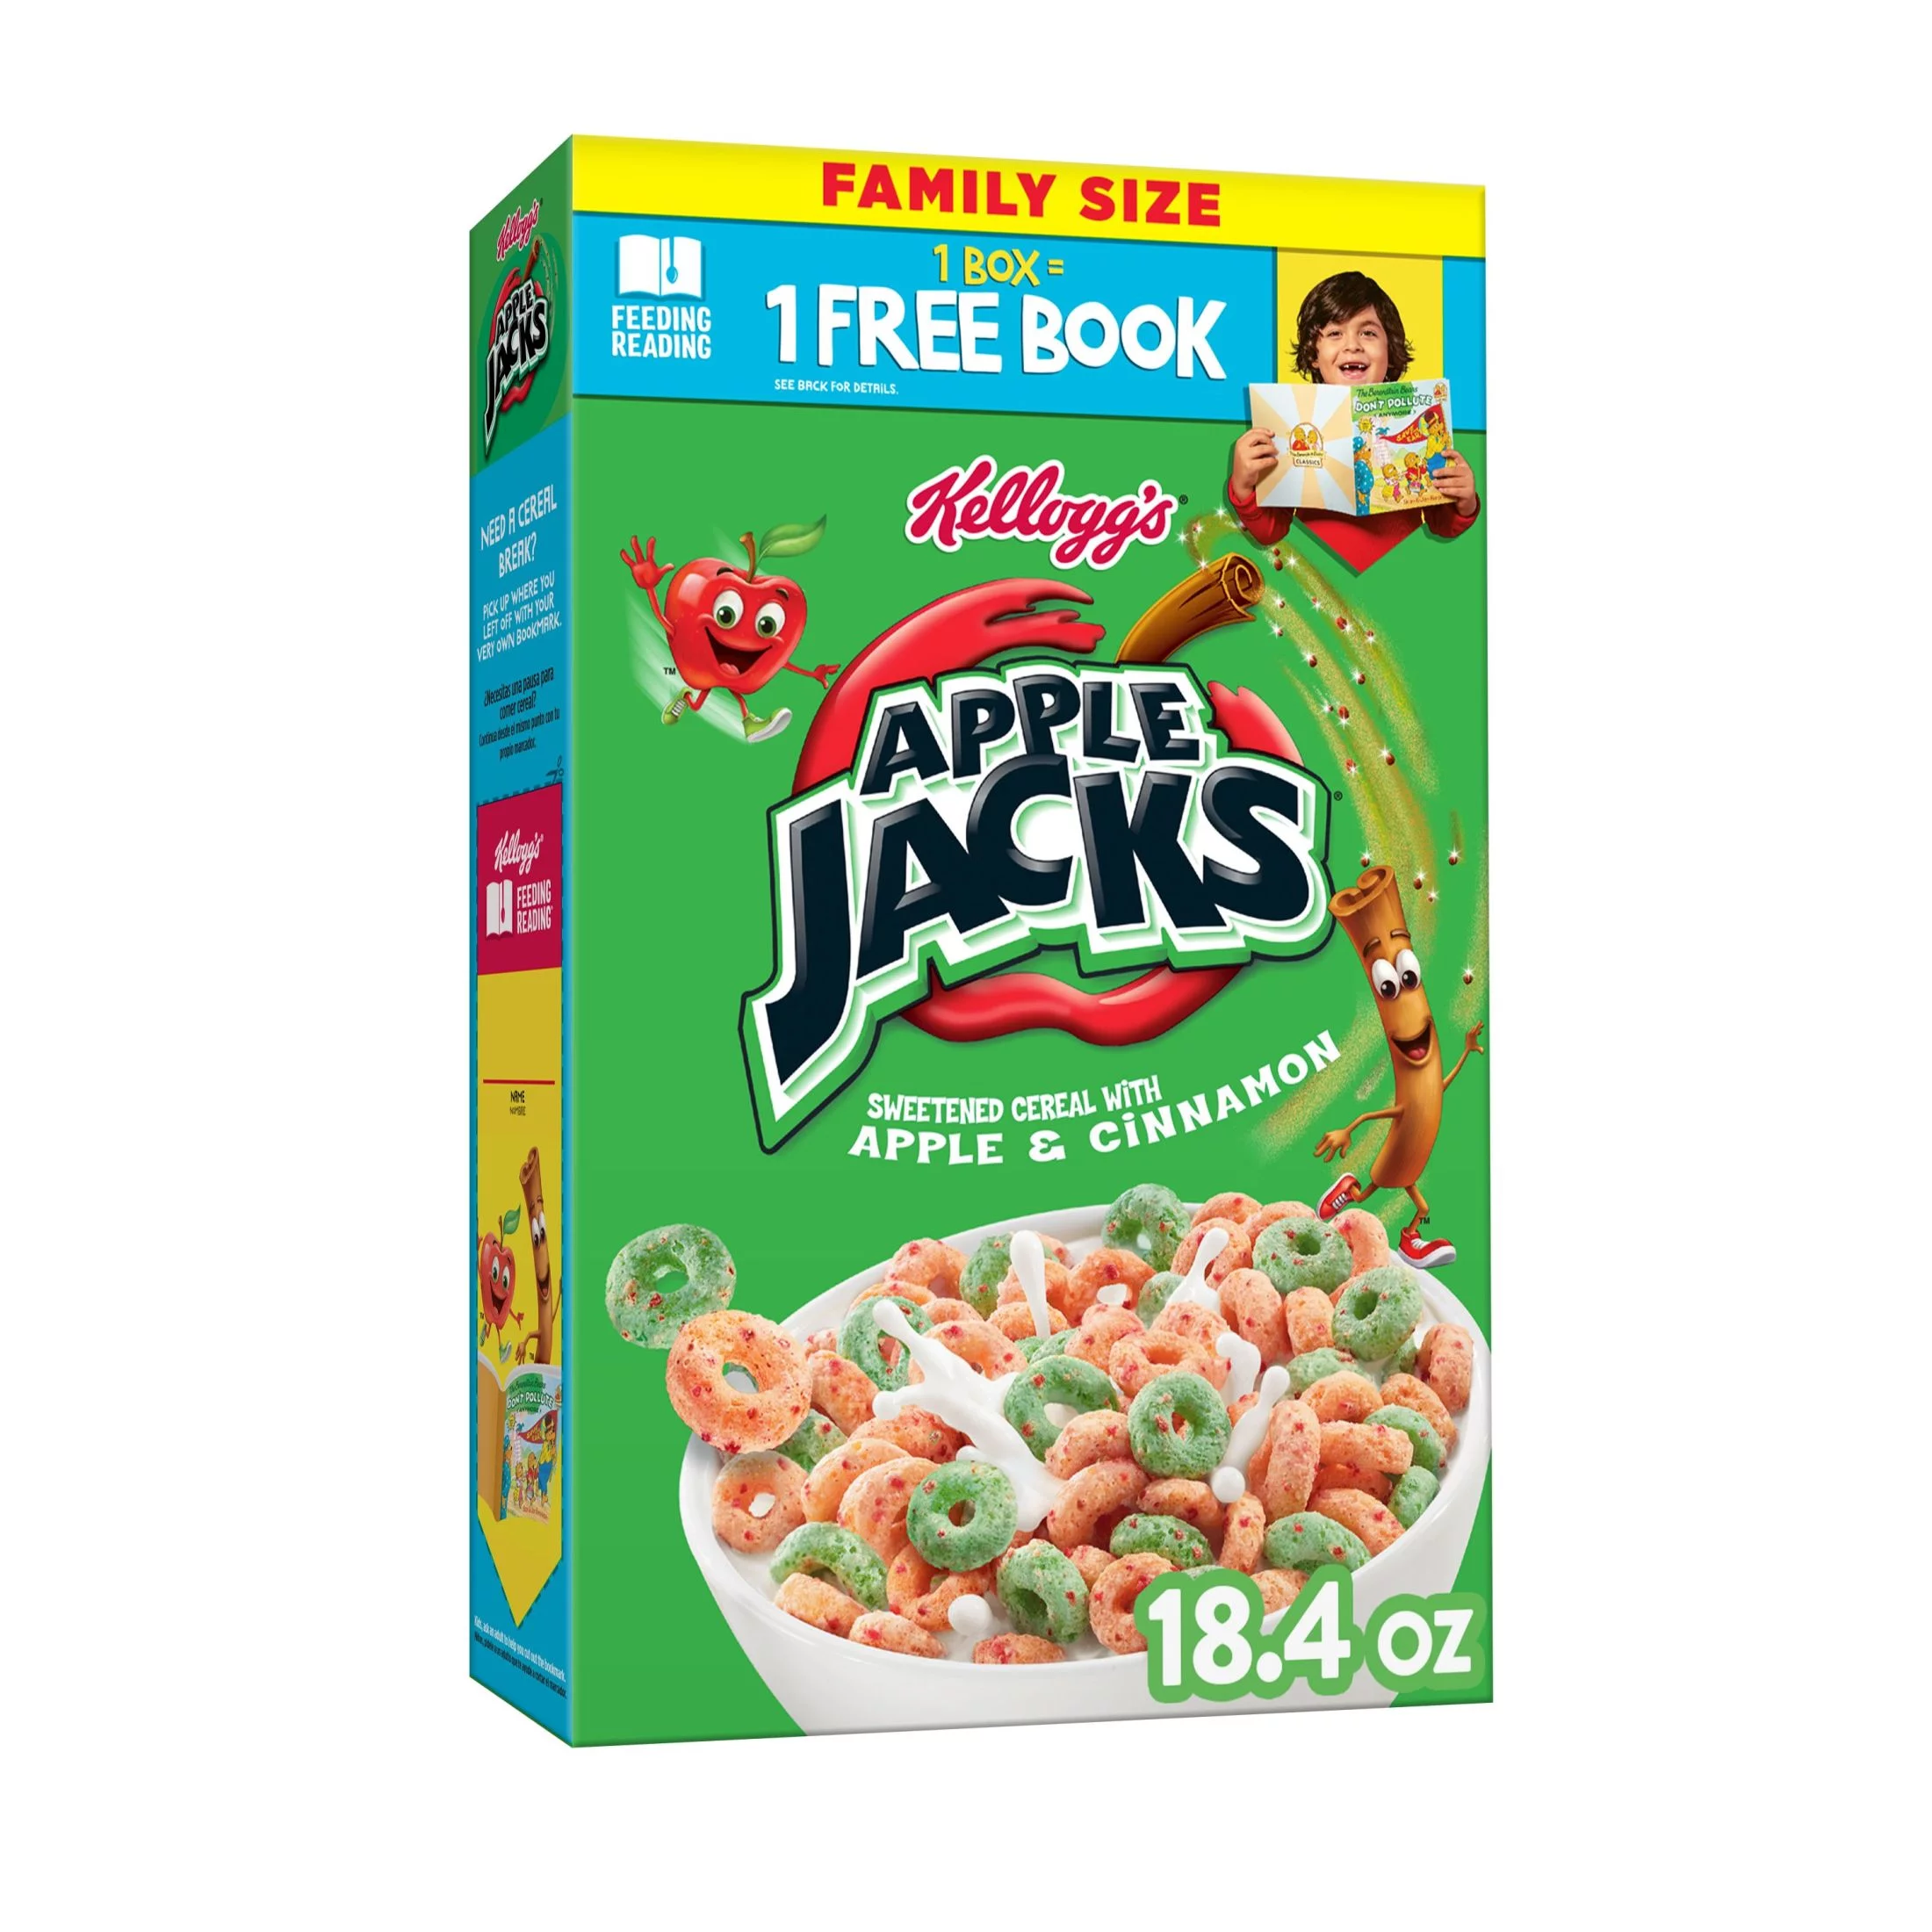 Kellogg's Apple Jacks Original Breakfast Cereal, Family Size, 18.4 oz Box